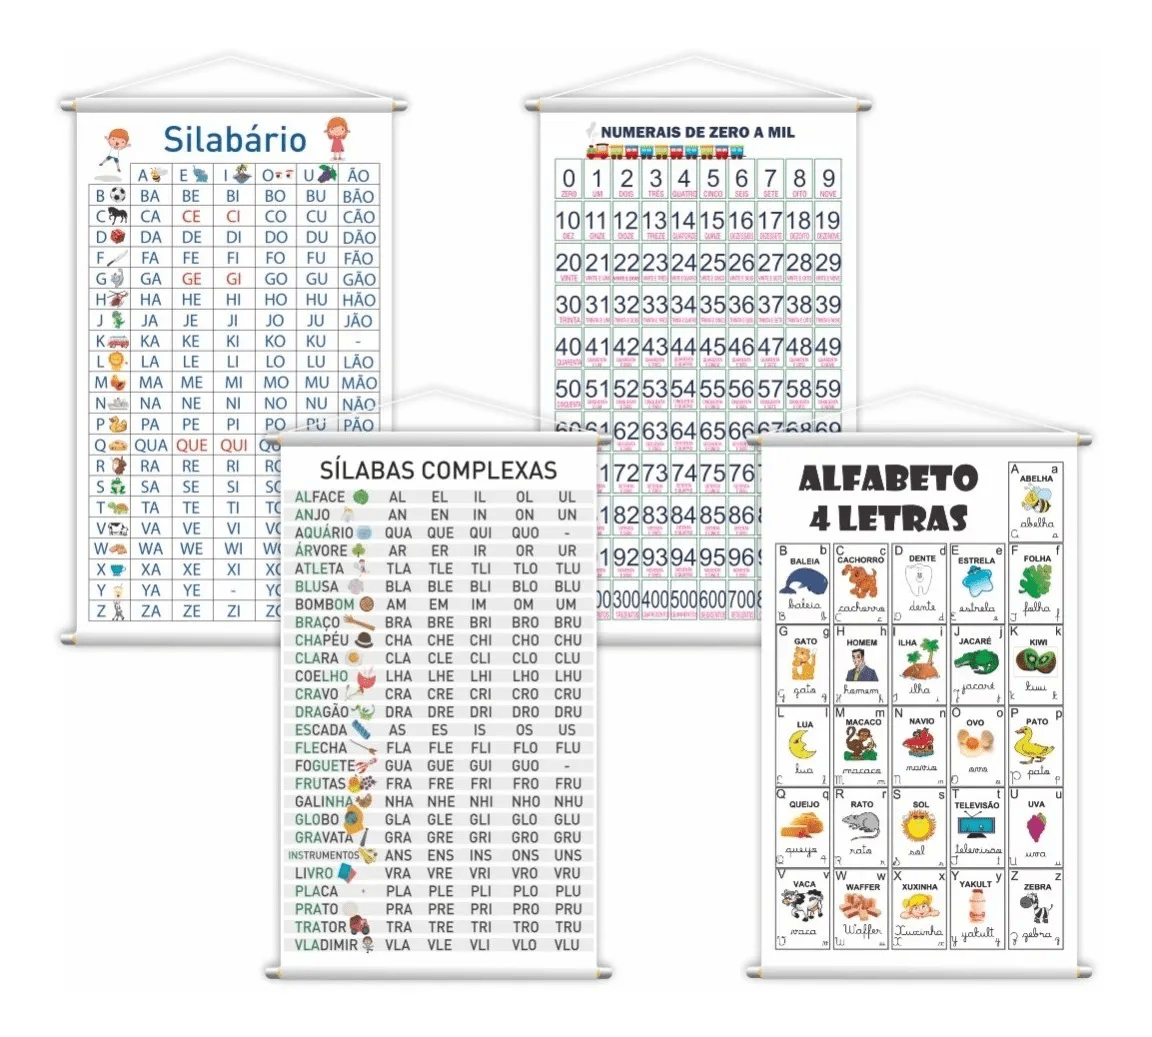 Banners Silabário Simples + Complexo + Alfabeto 4 Letras + Num1000